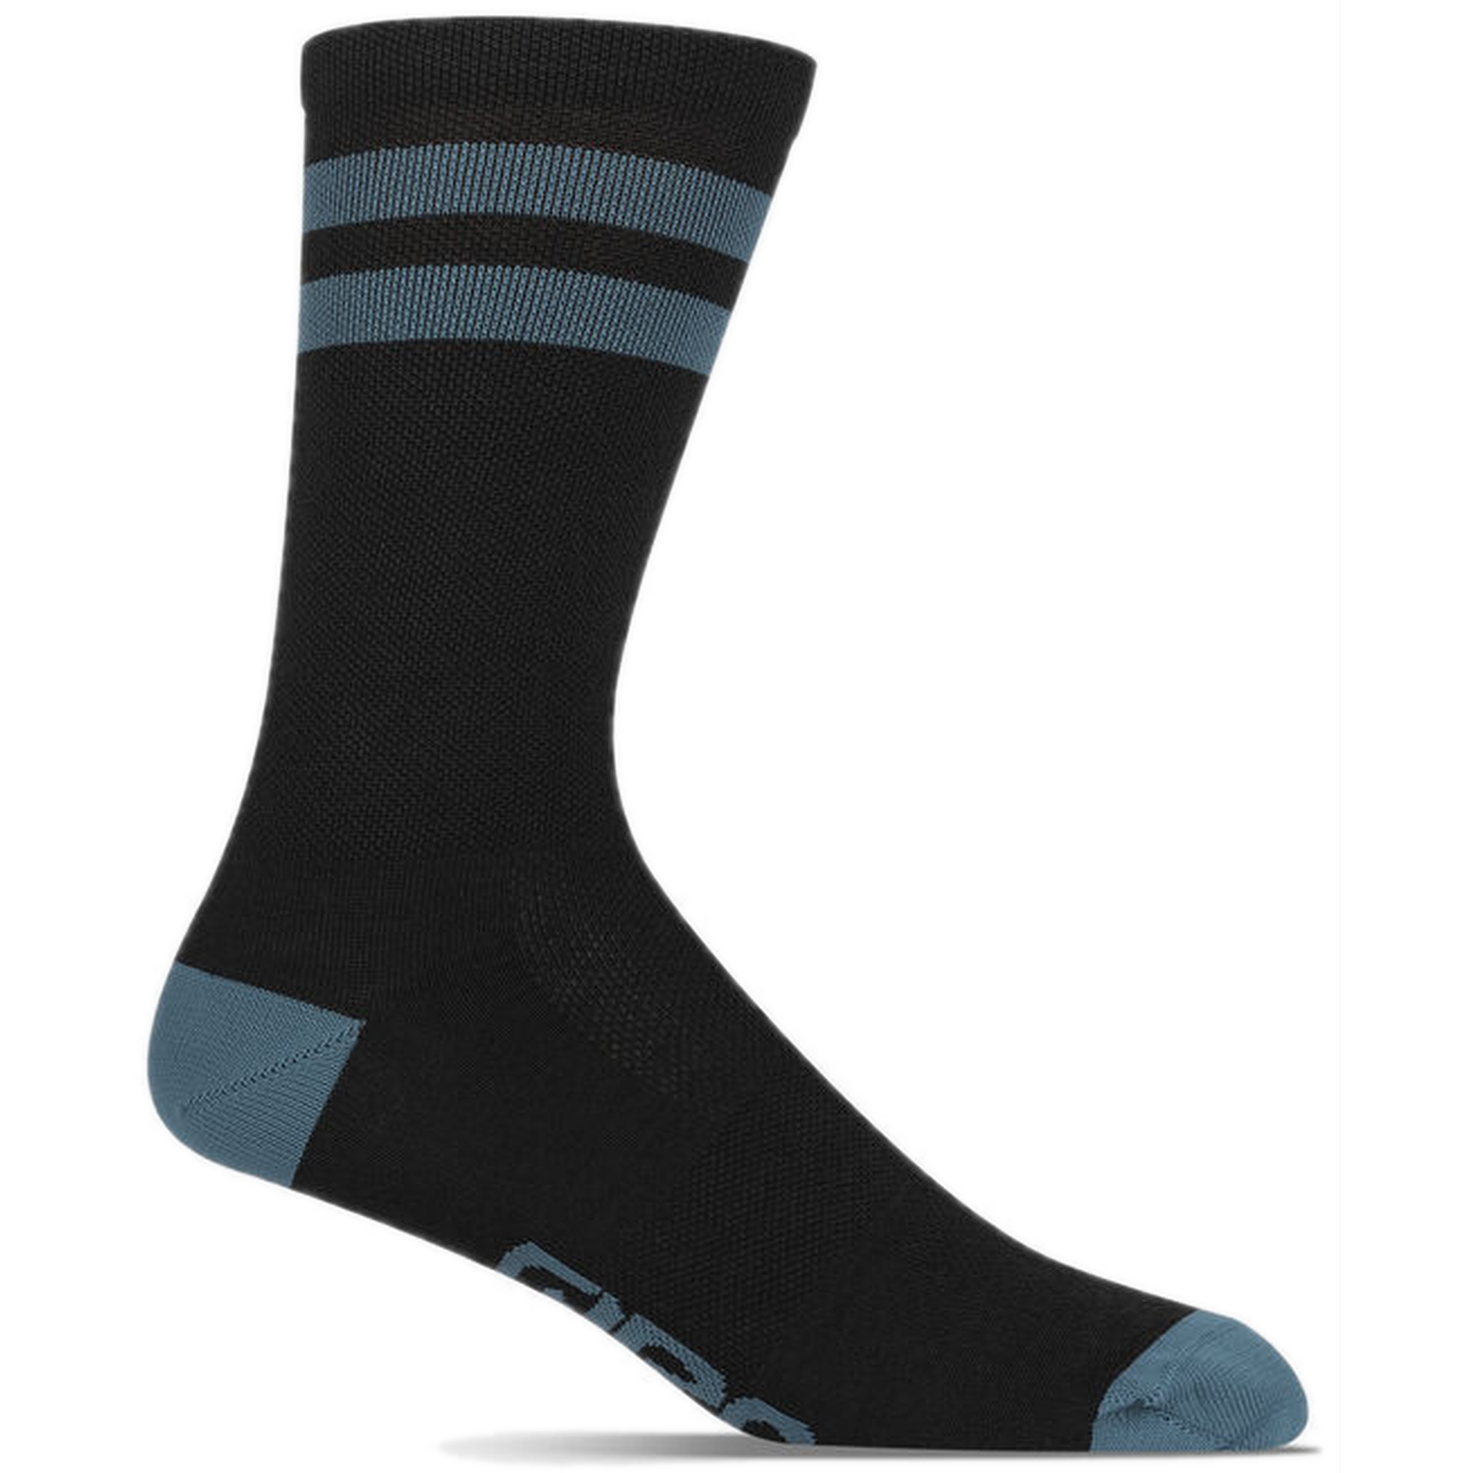 Produktbild von Giro Winter Merino Wool Socken - black/harbor blue